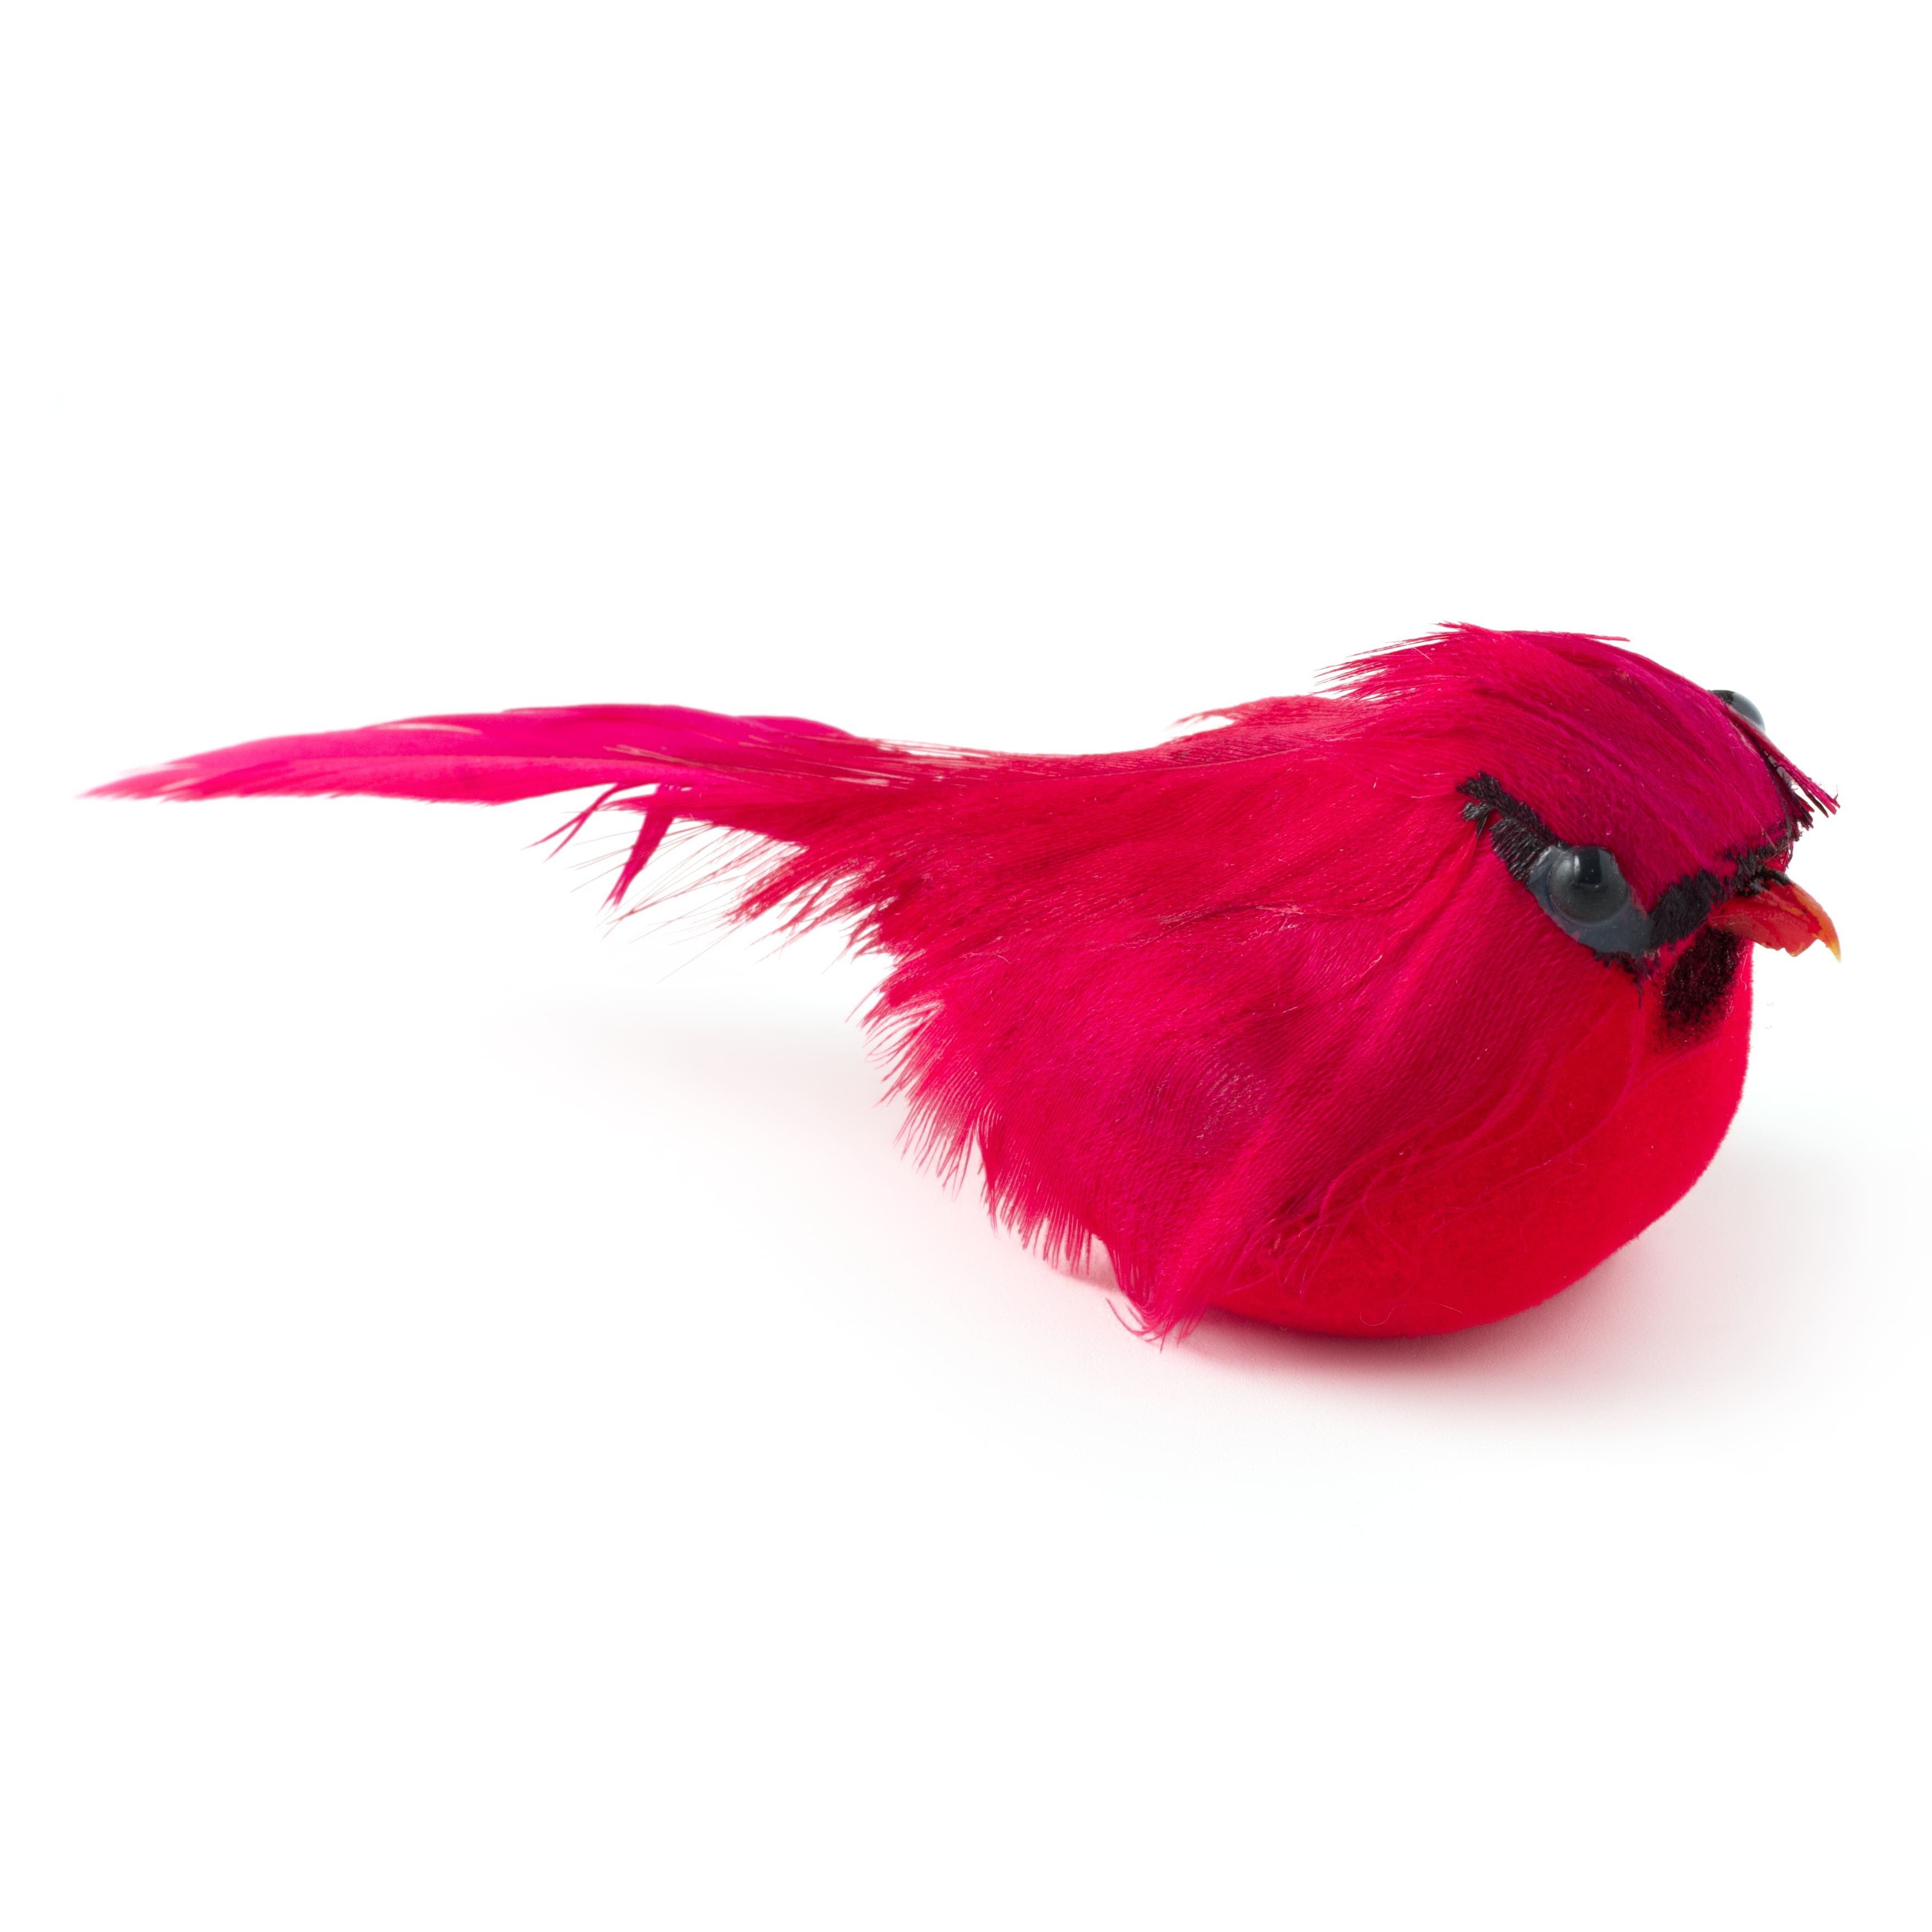 Small Cardinal Bird by Ashland&#xAE;